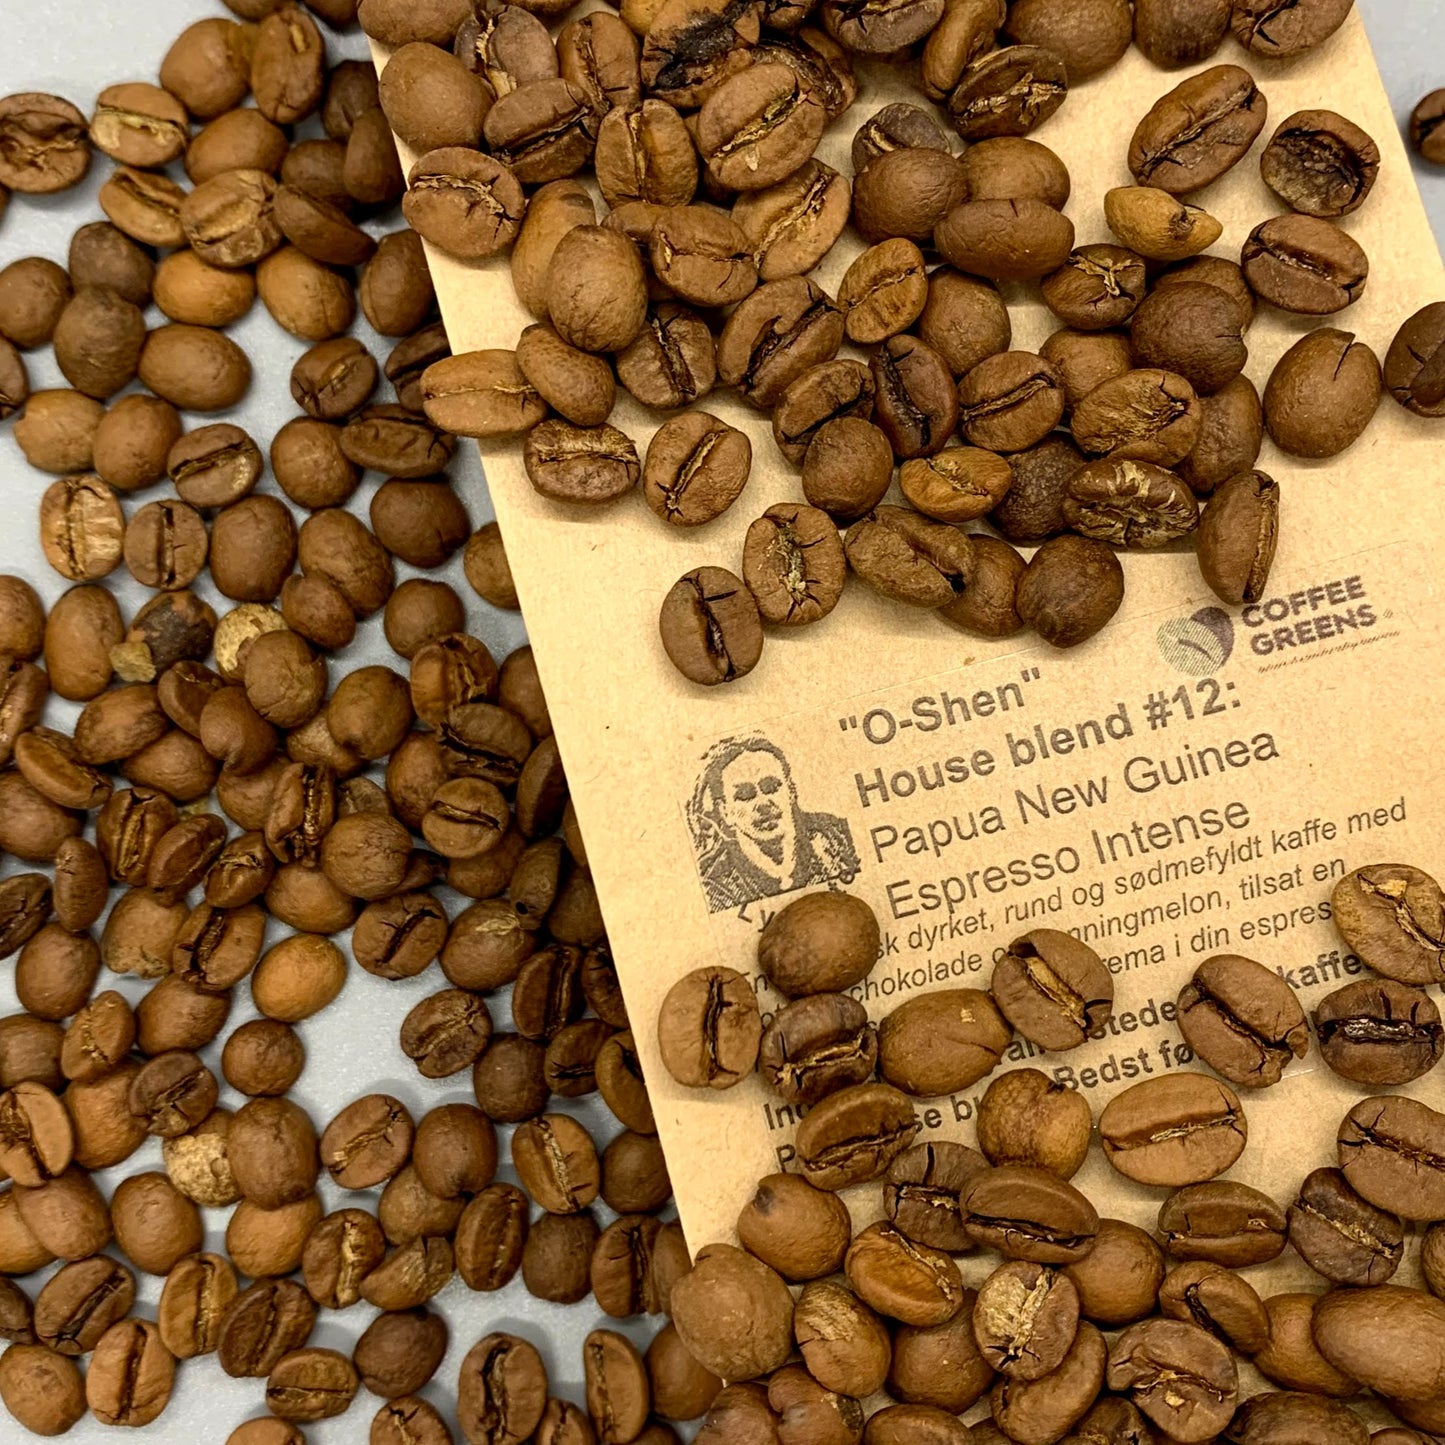 "O-Shen" - House blend #12: Papua New Guinea Espresso Intense - Ristede kaffebønner.